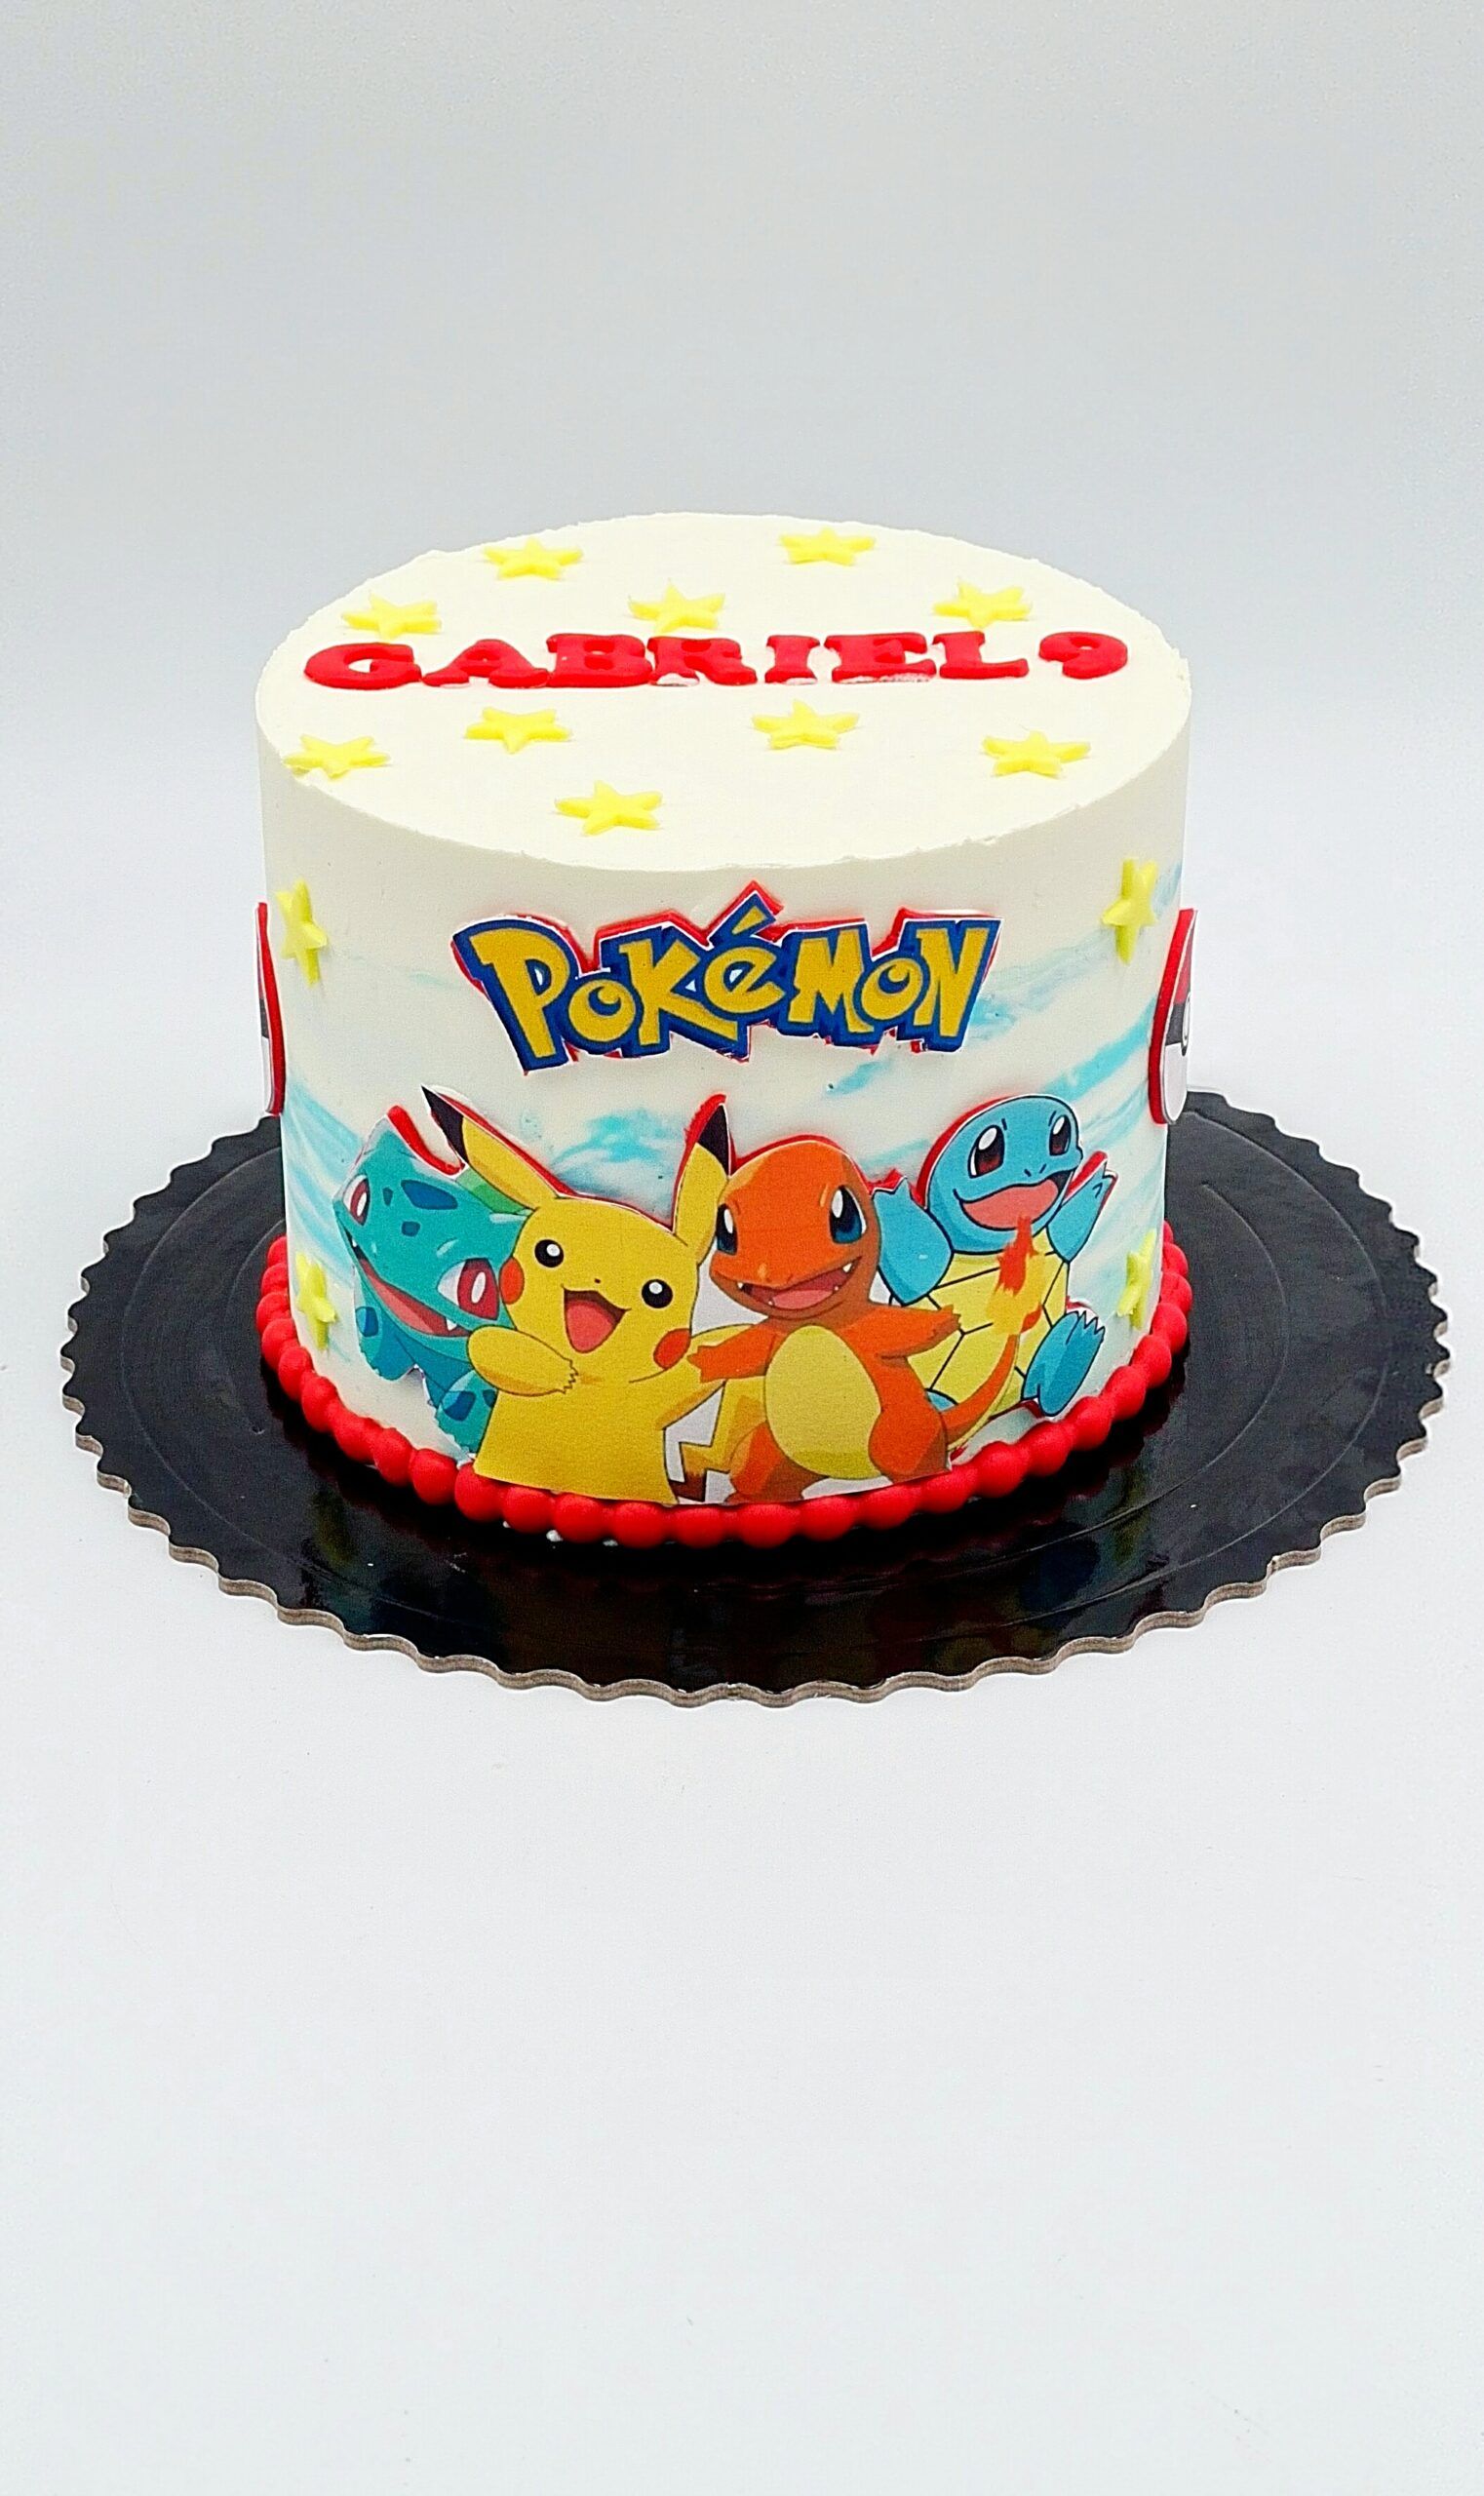 Pokémon sur gâteau badge 🍰